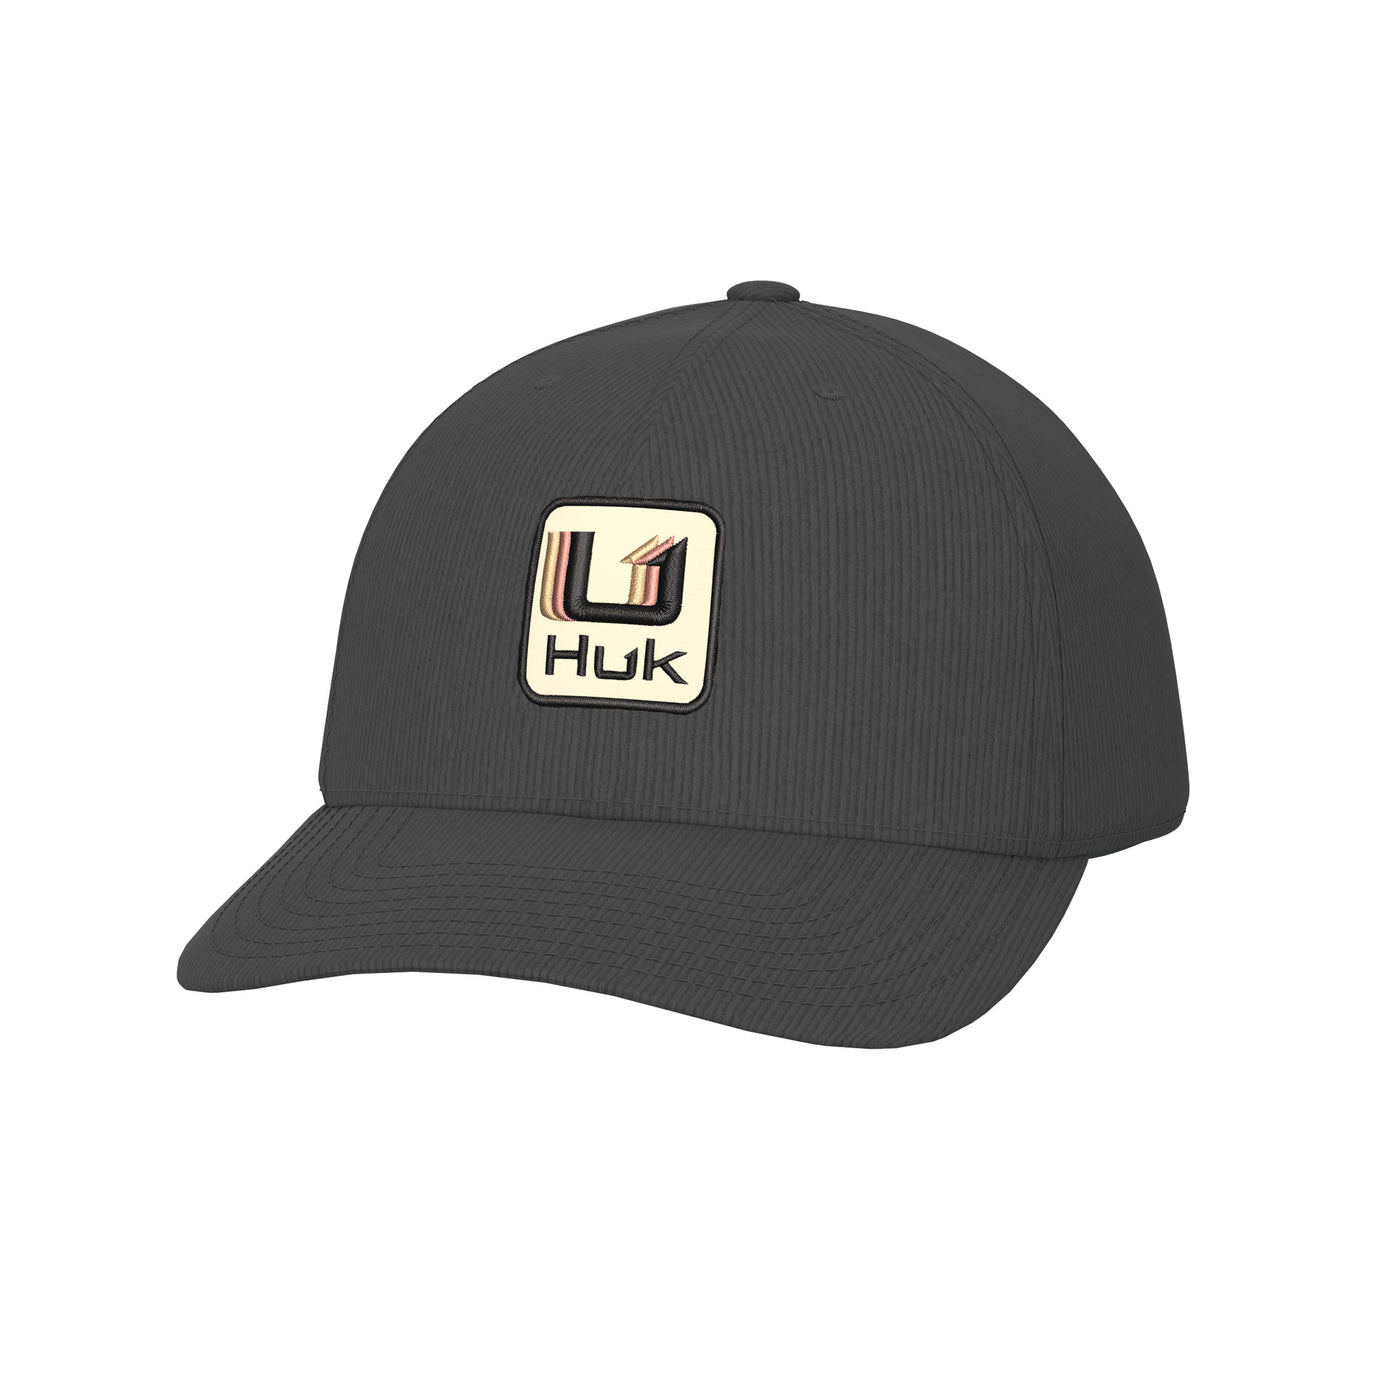 Huk Full Cord Hat